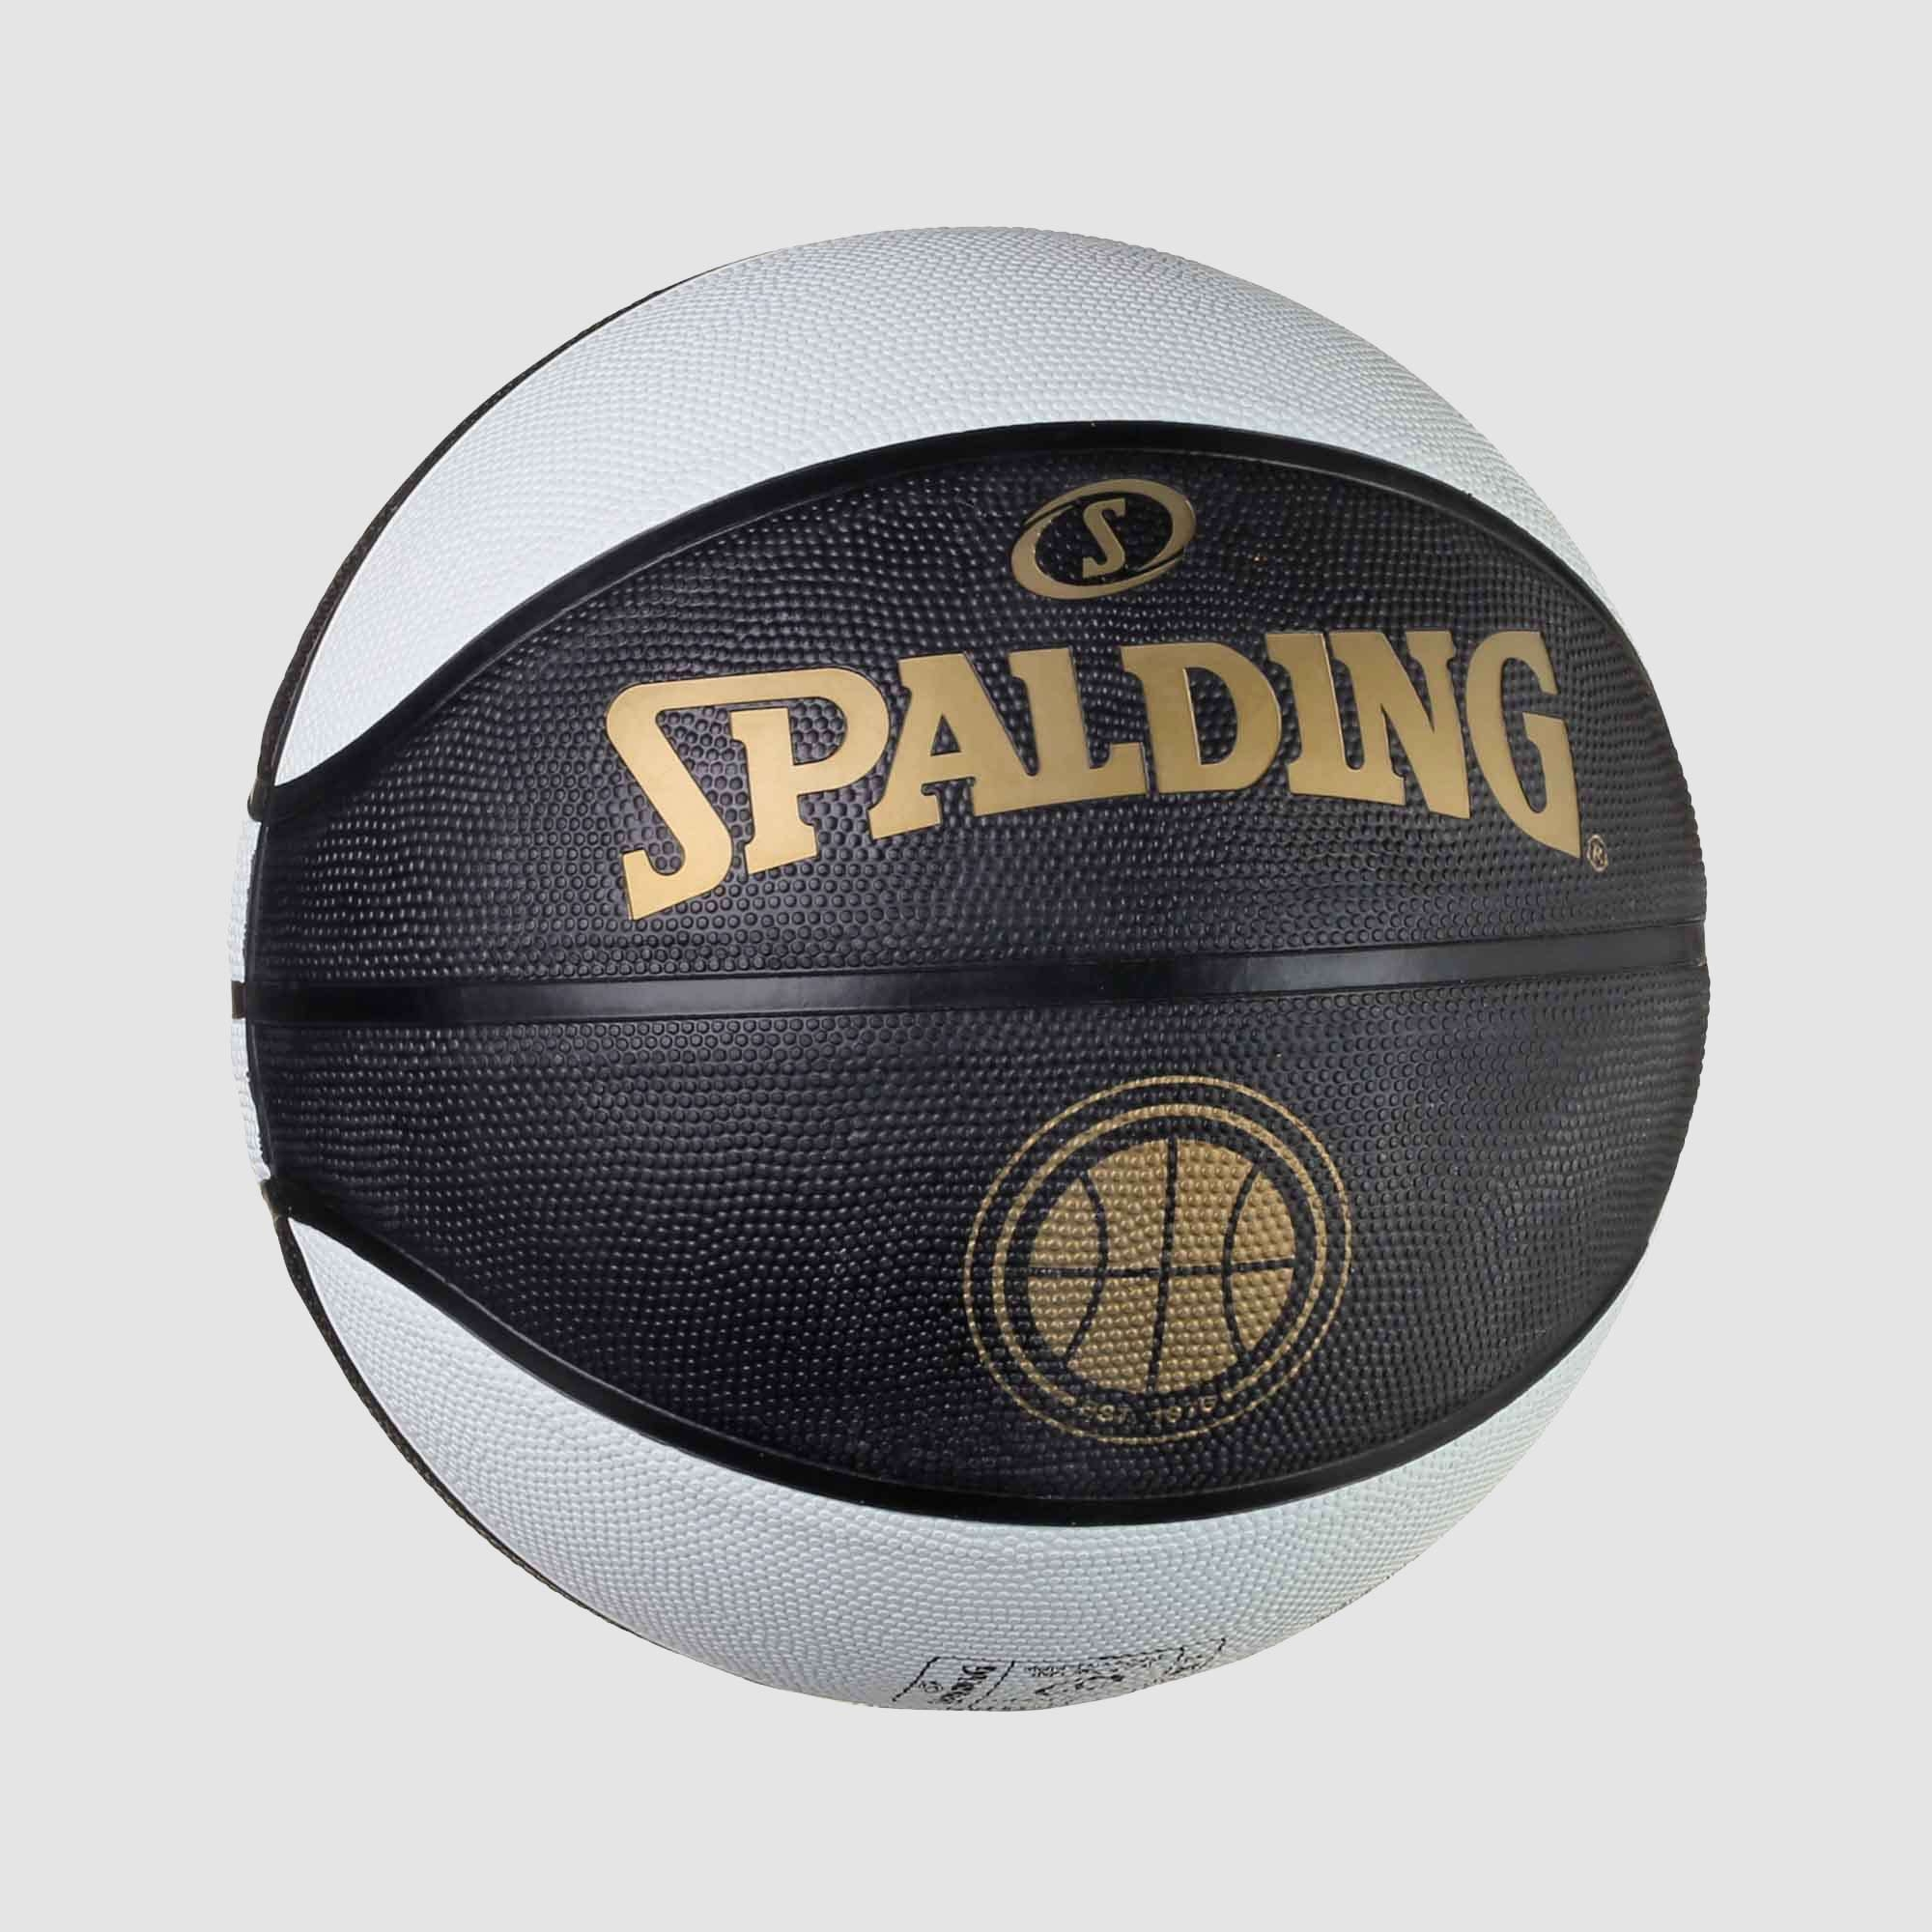 Spalding Original Game Ball Outdoor Black/White Sz 7